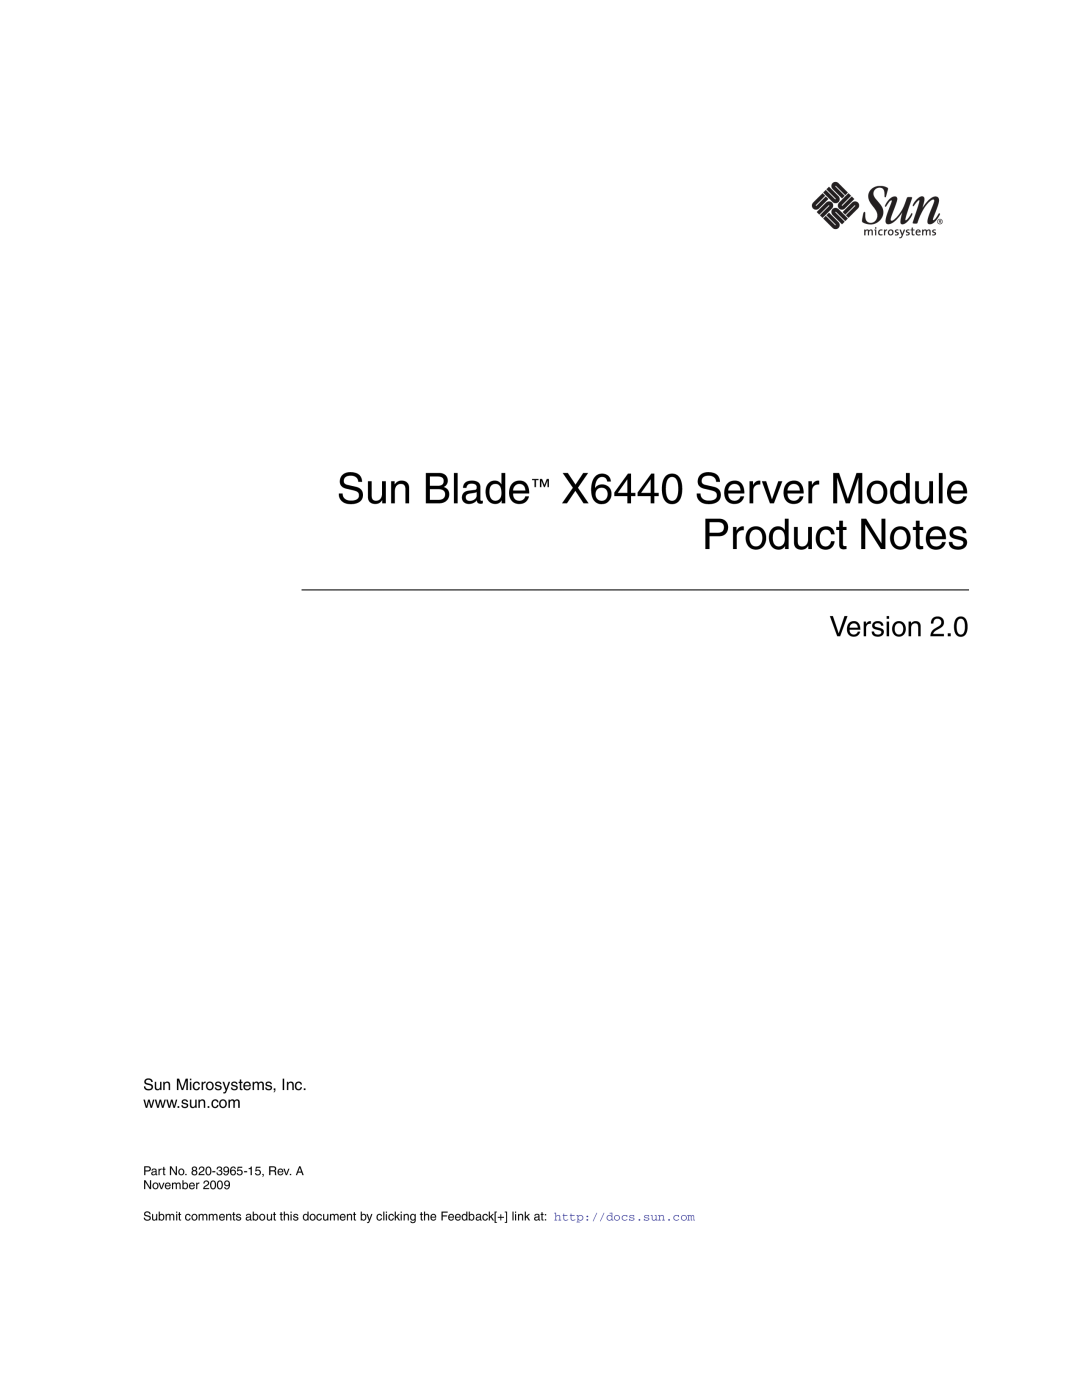 Sun Microsystems manual Sun Blade X6440 Server Module Product Notes, Version, Sun Microsystems, Inc 